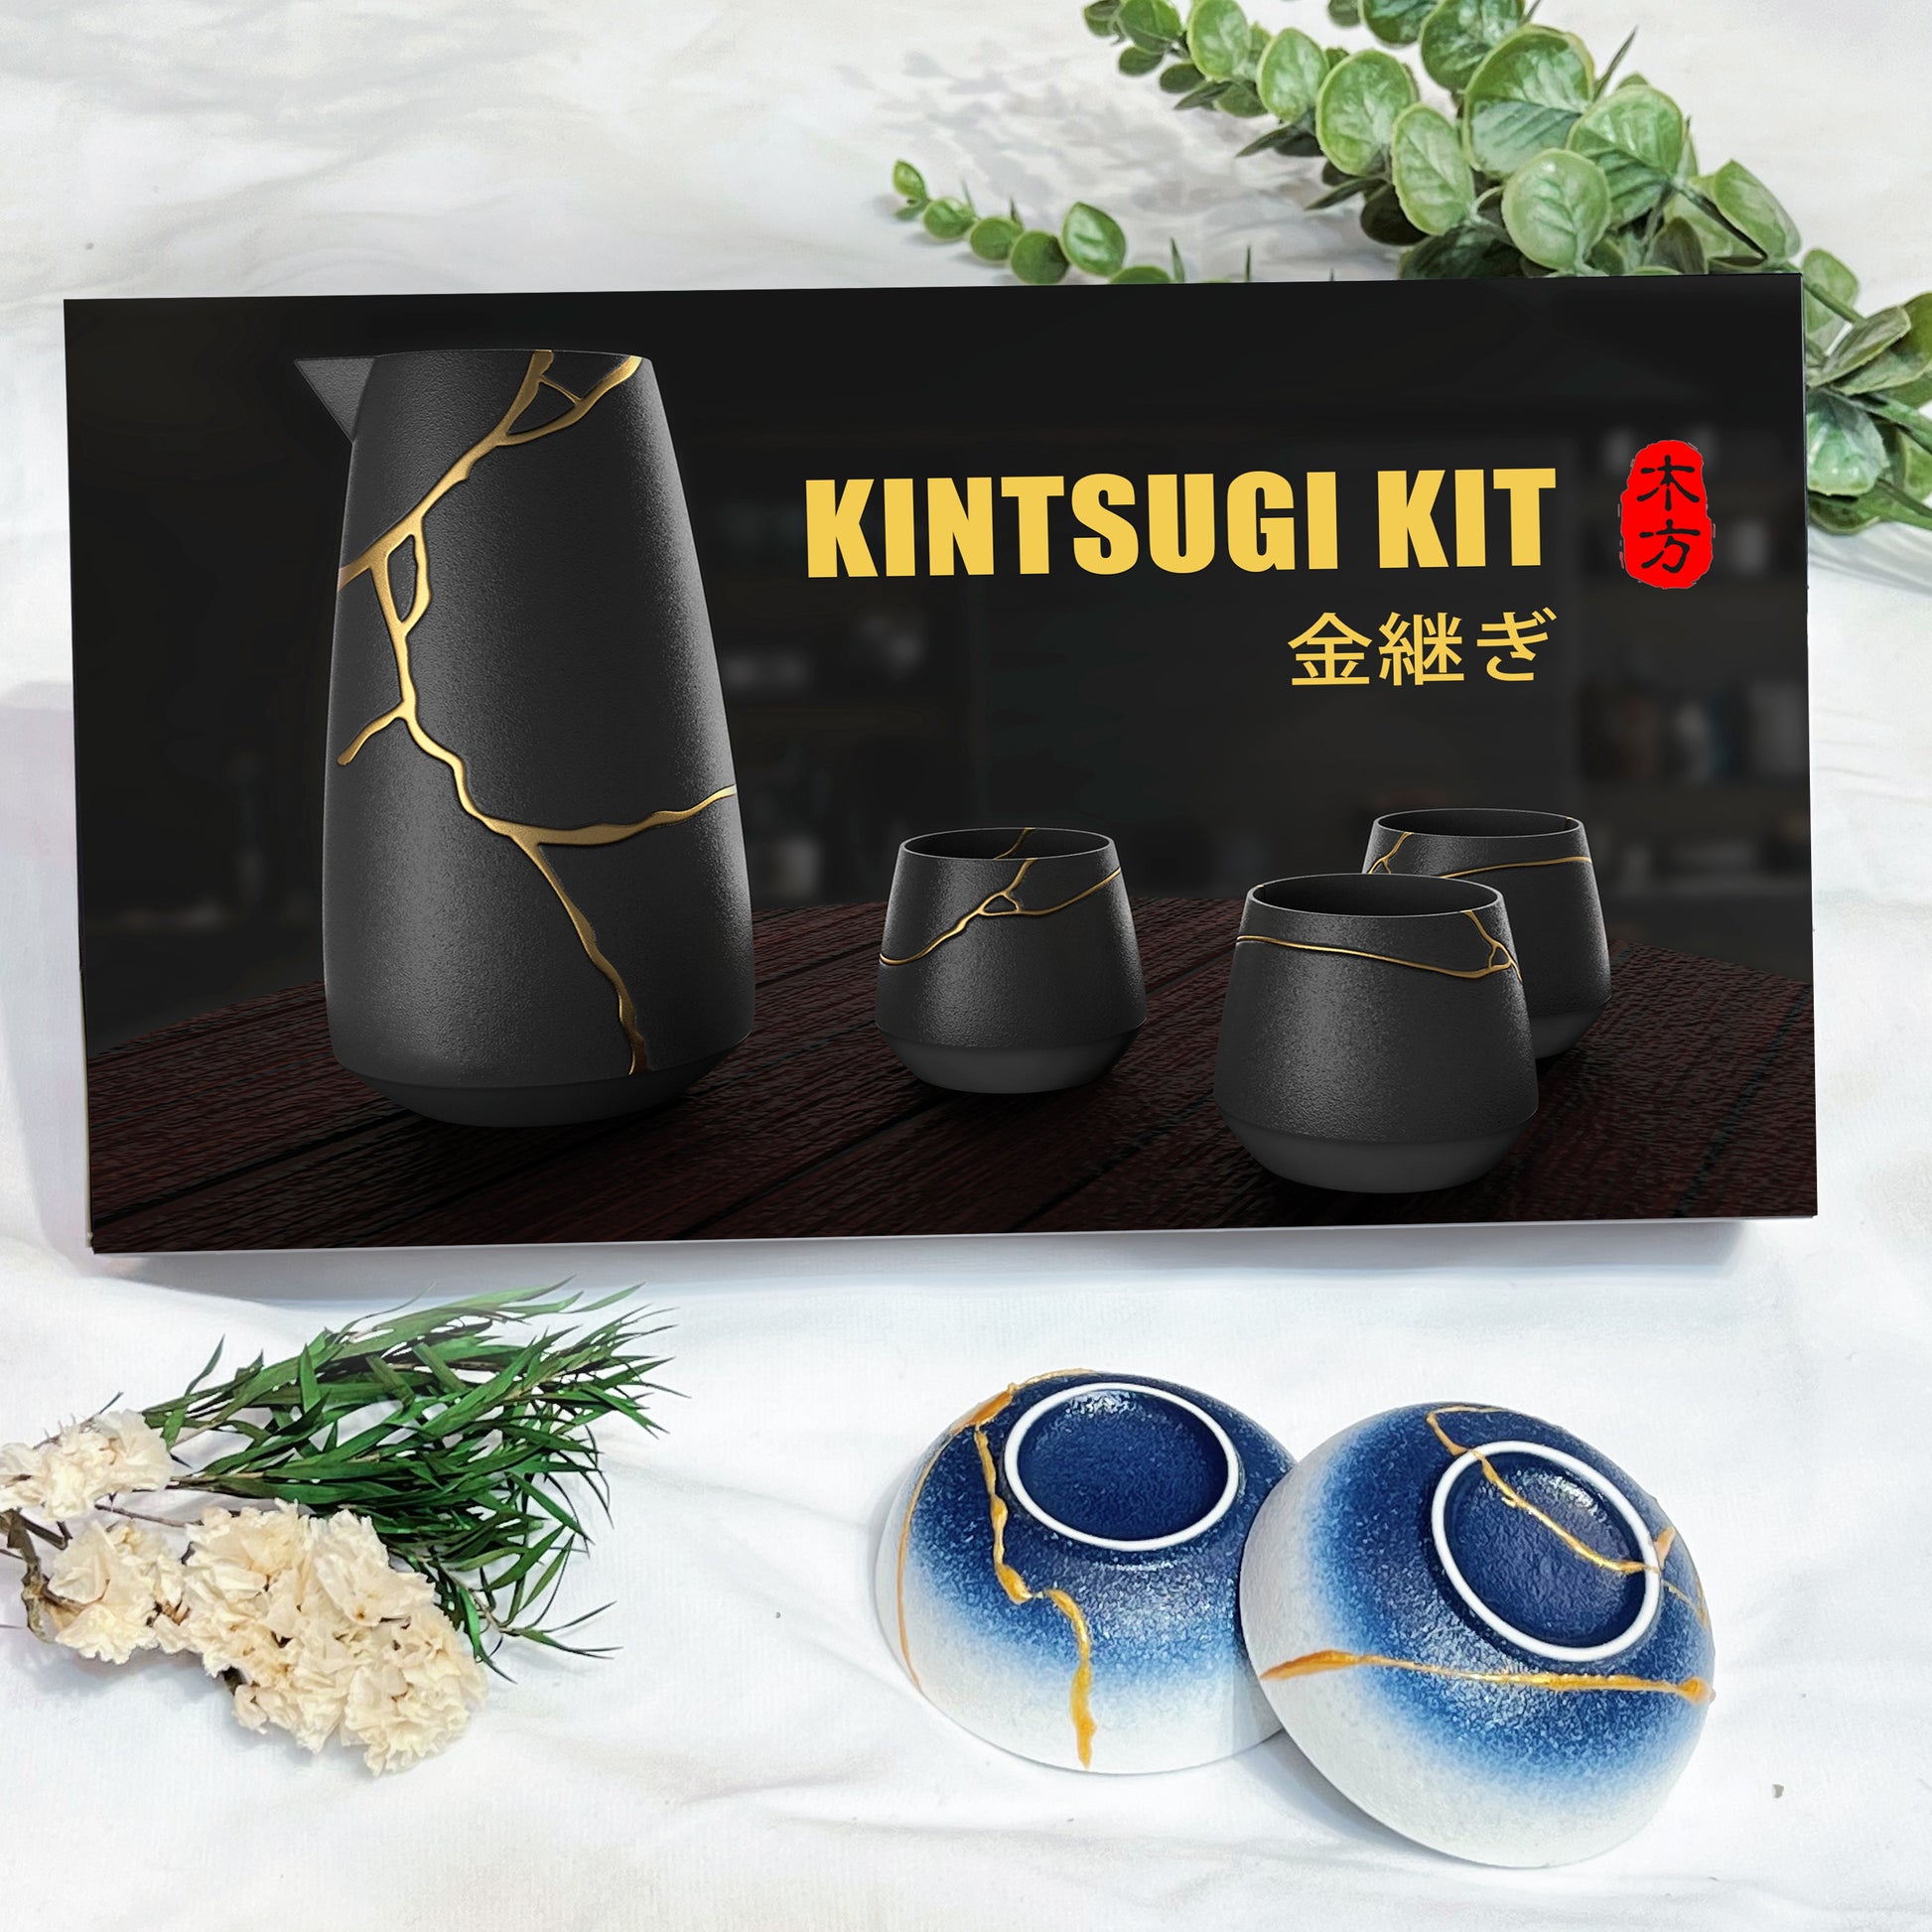 Starter Repair Ceramic Kintsugi Kit - Best kintsugi repair kits by